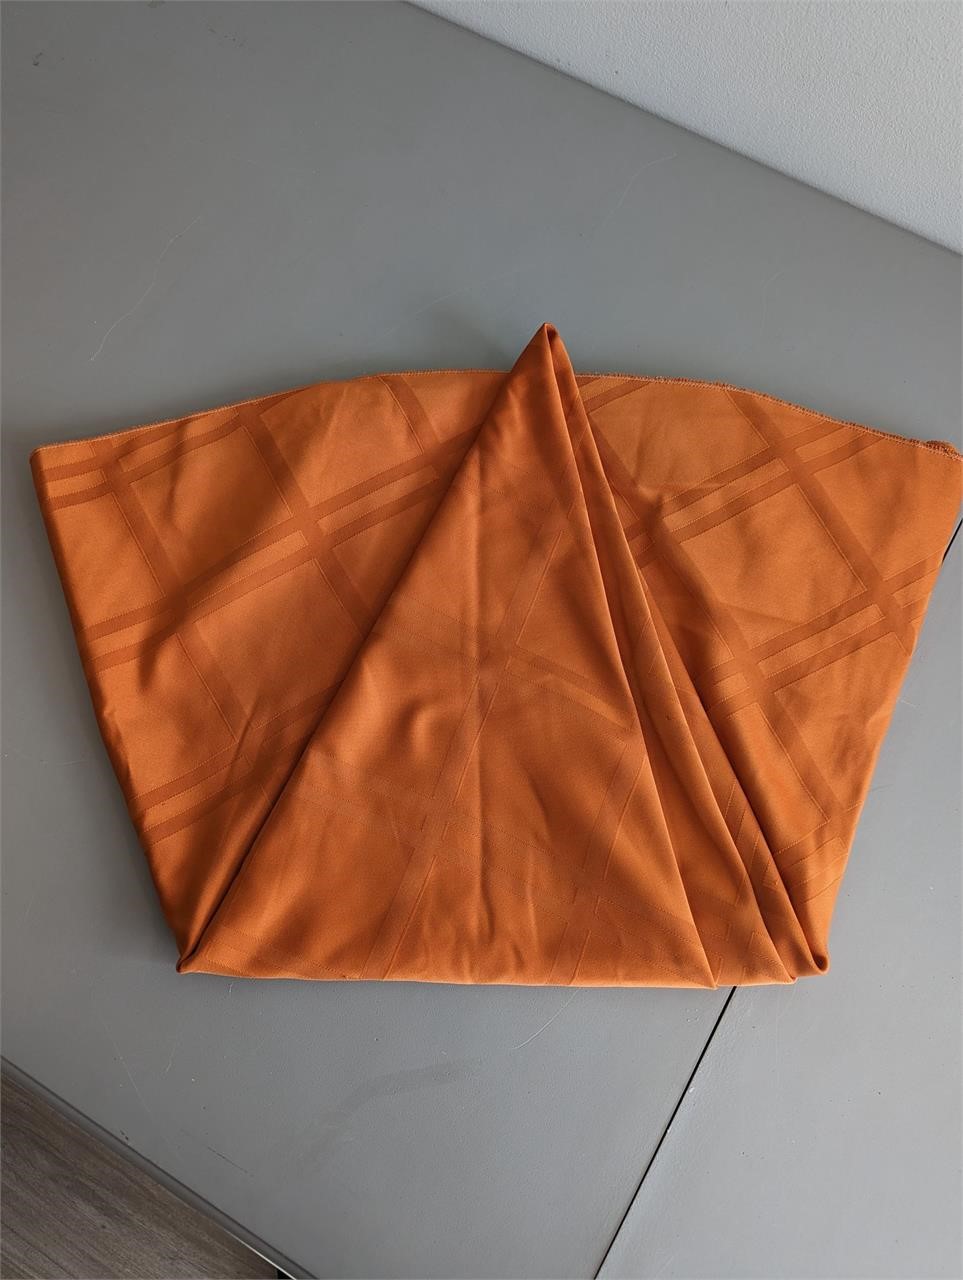 Orange table cloth 5 ft